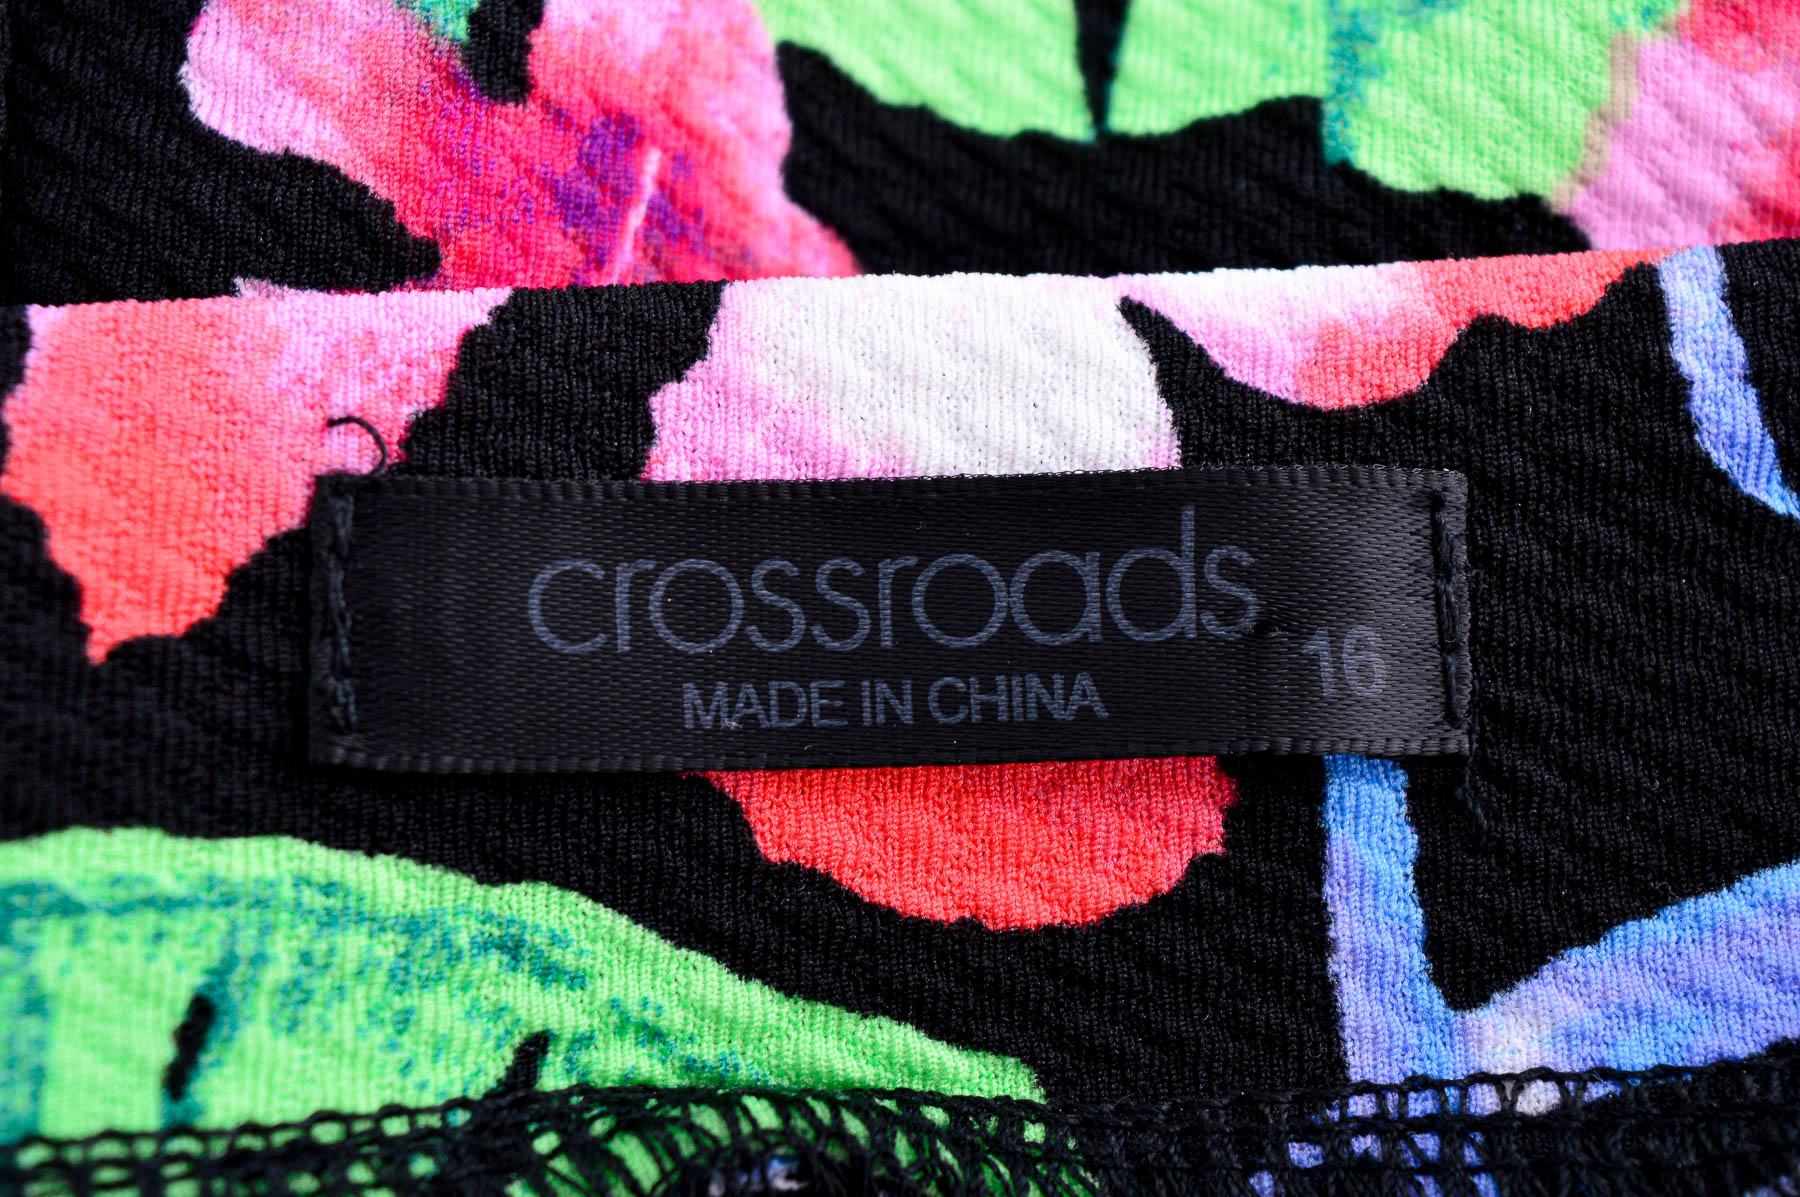 Dress - Crossroads - 2